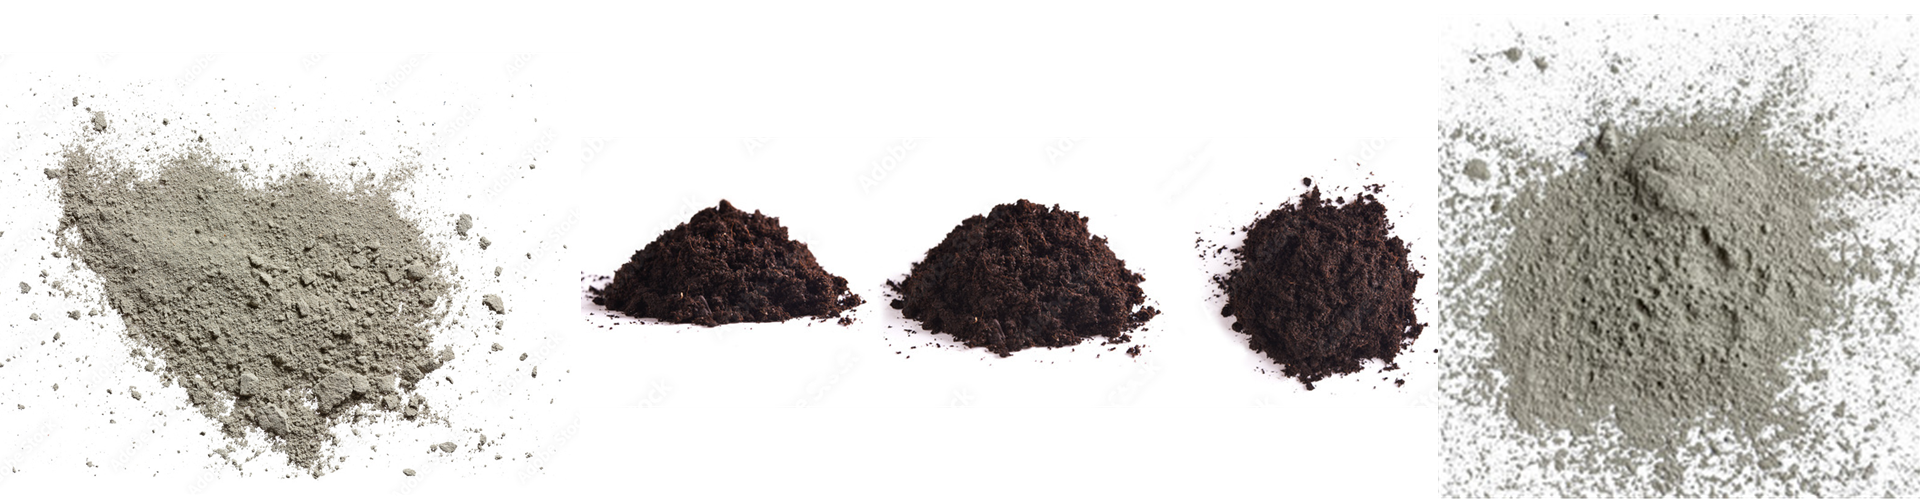 karvil-cemnent-powder-dry-mortar-poewder-soil-mixer-machine